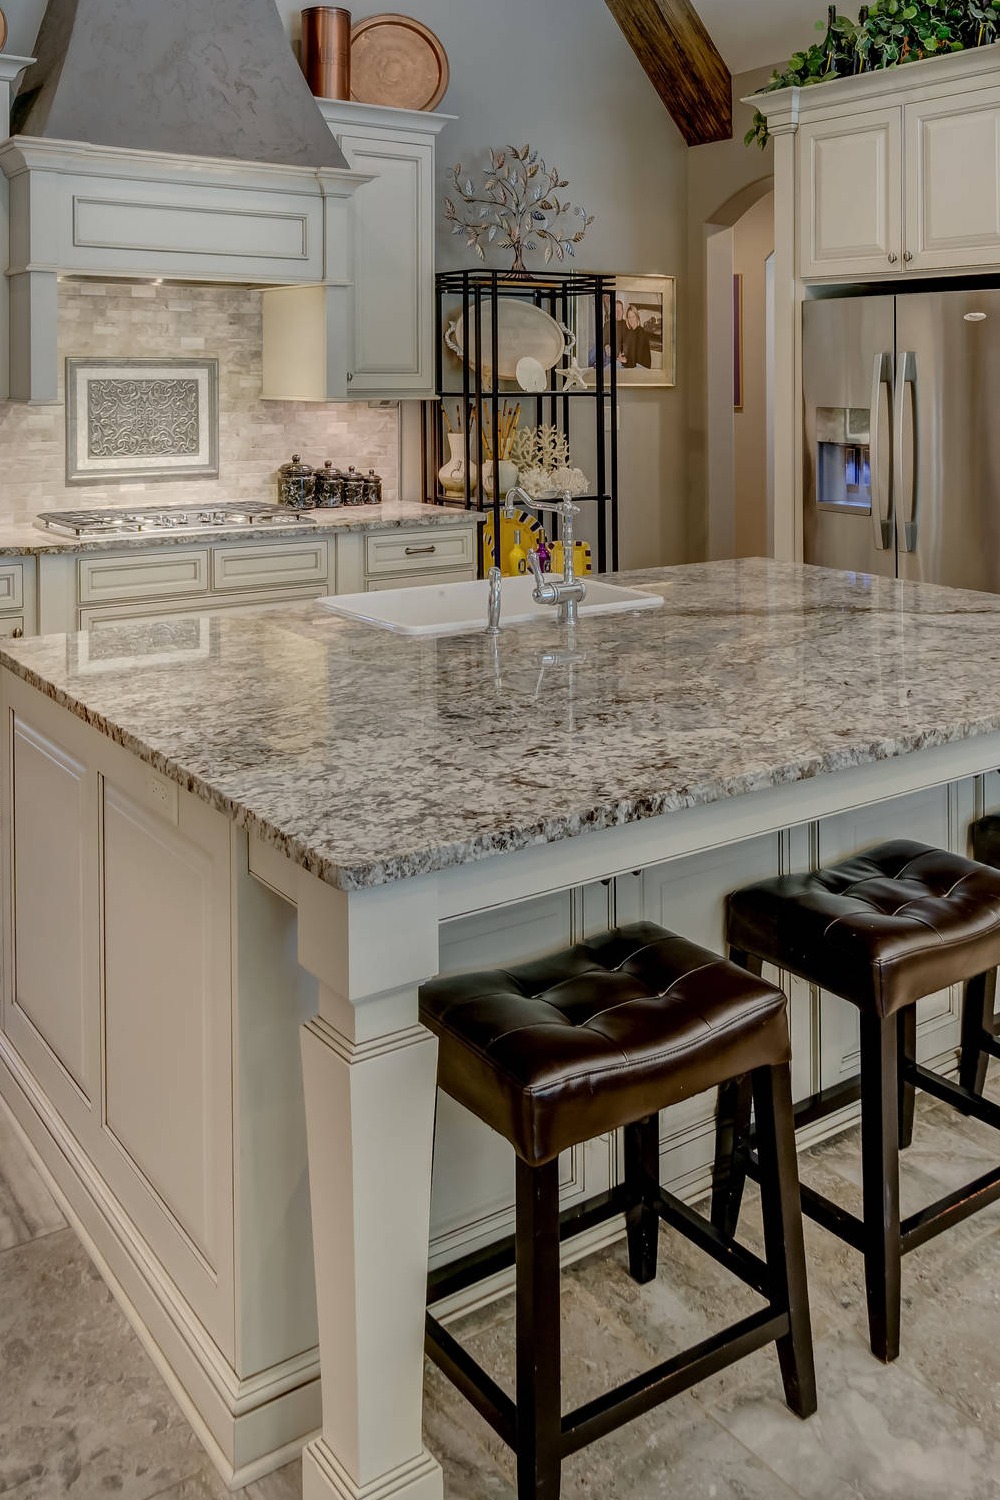 White Cabinets Stainless Steel Appliances Modern Backsplash Granite Countertops Travertine Flooring